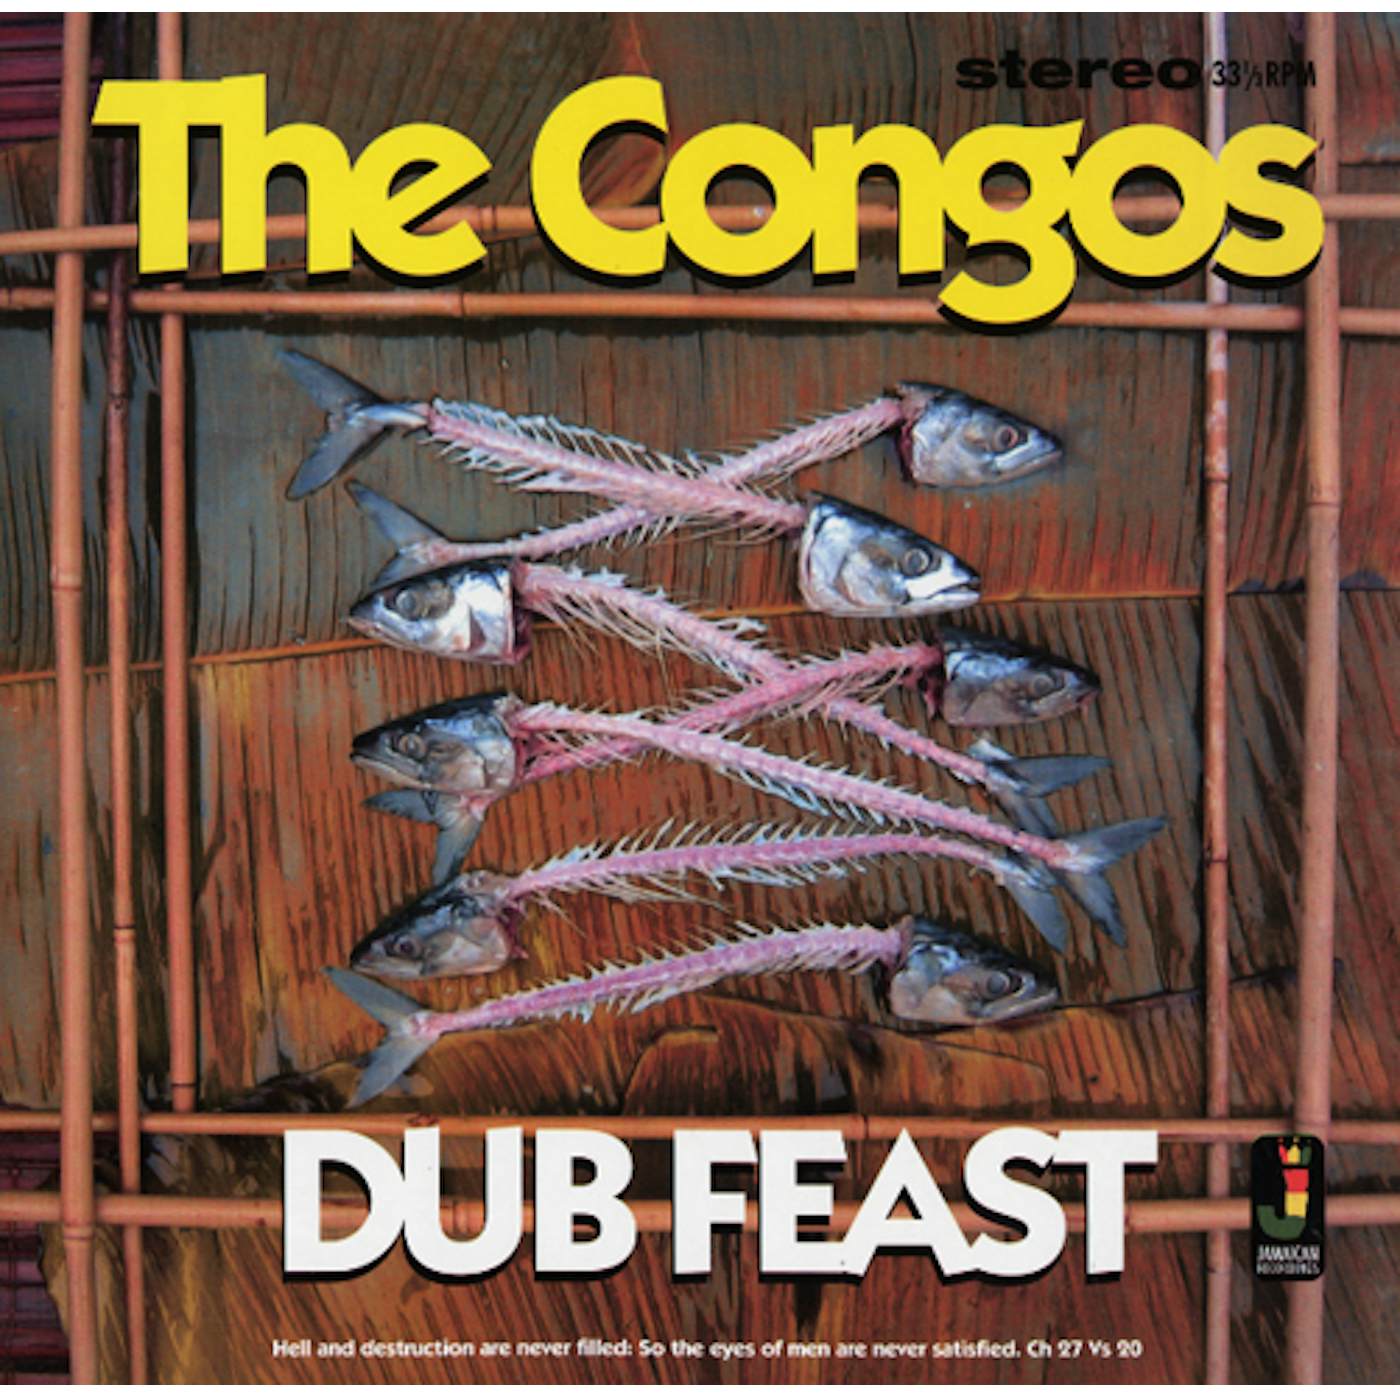 Congos Dub Feast Vinyl Record